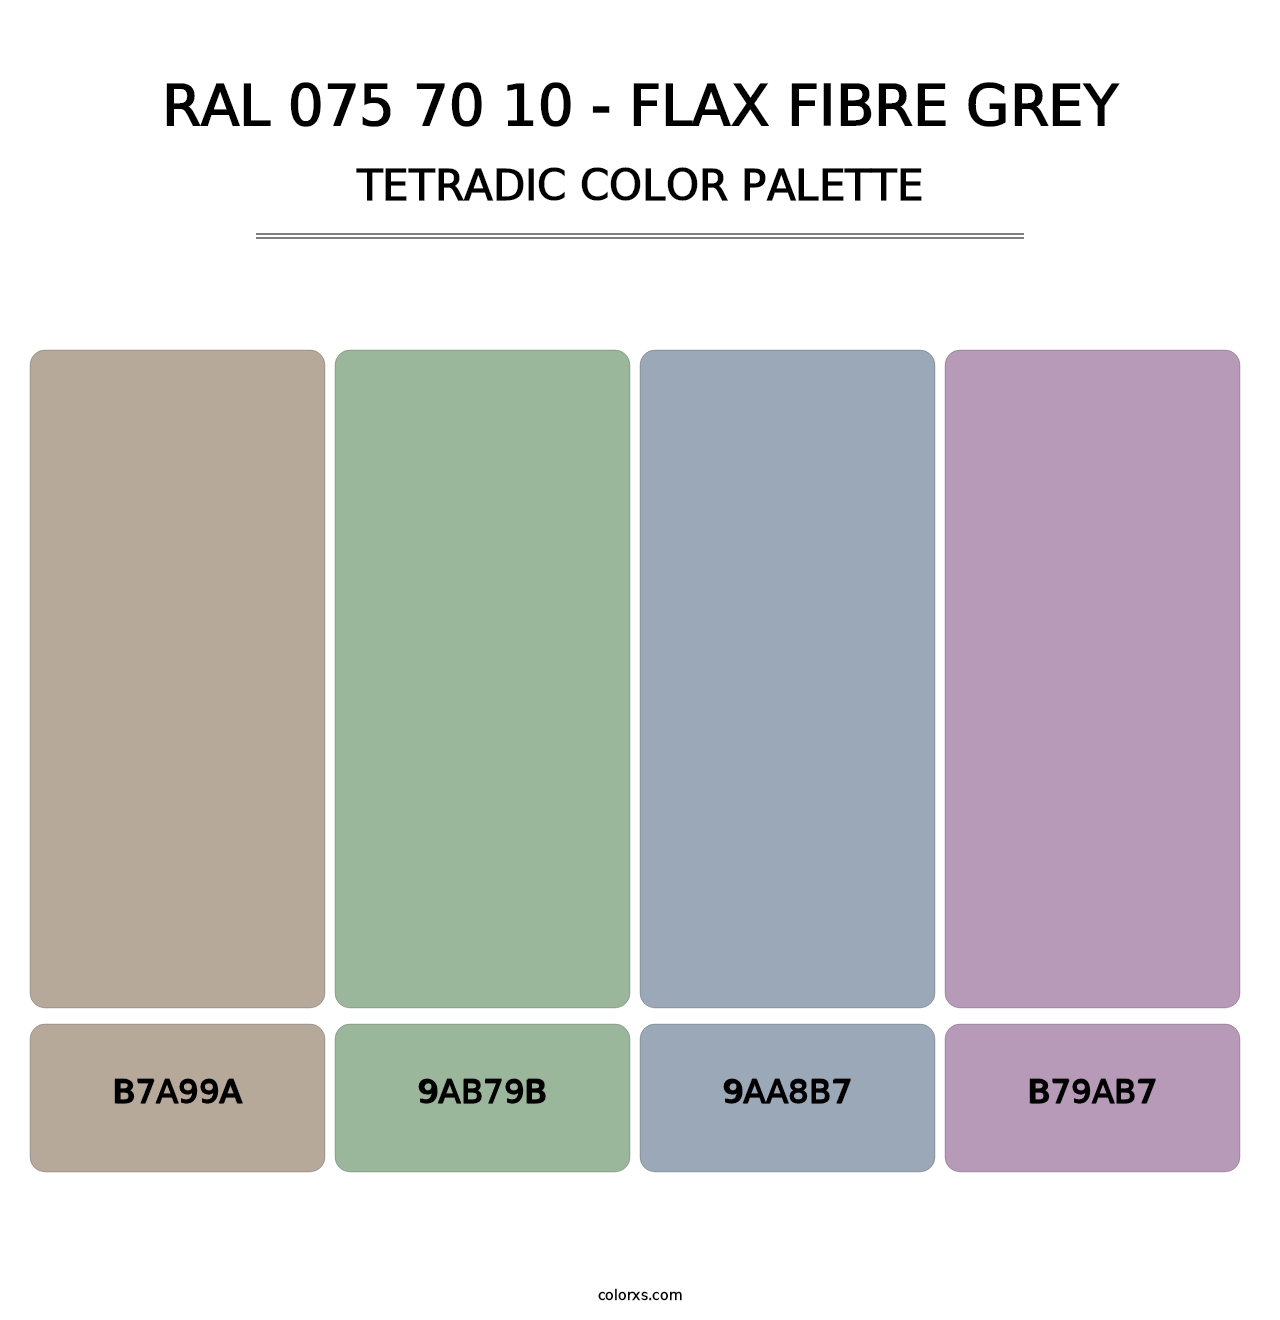 RAL 075 70 10 - Flax Fibre Grey - Tetradic Color Palette